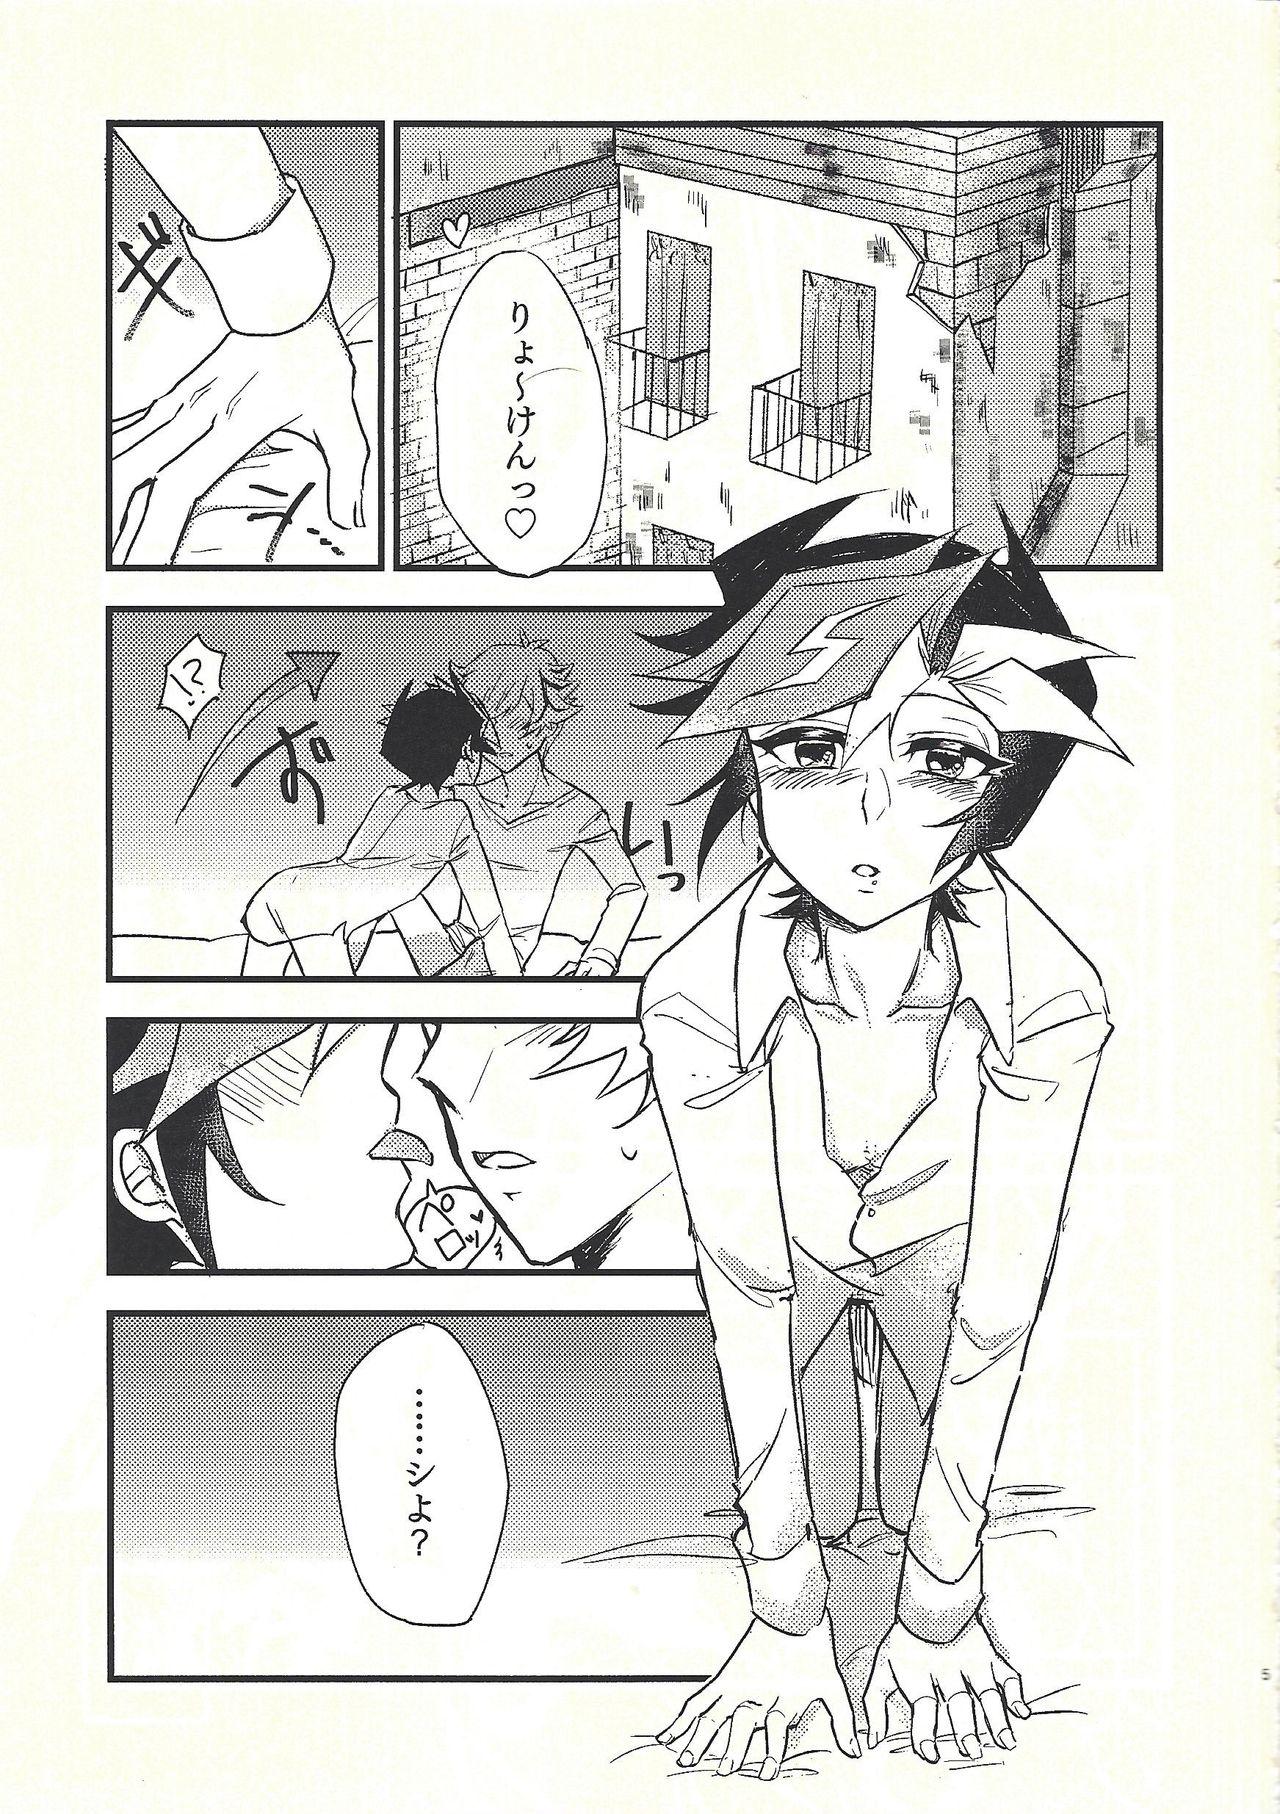 Spoon Shūniichido no nyanko-chan. - Yu gi oh vrains Work - Page 4